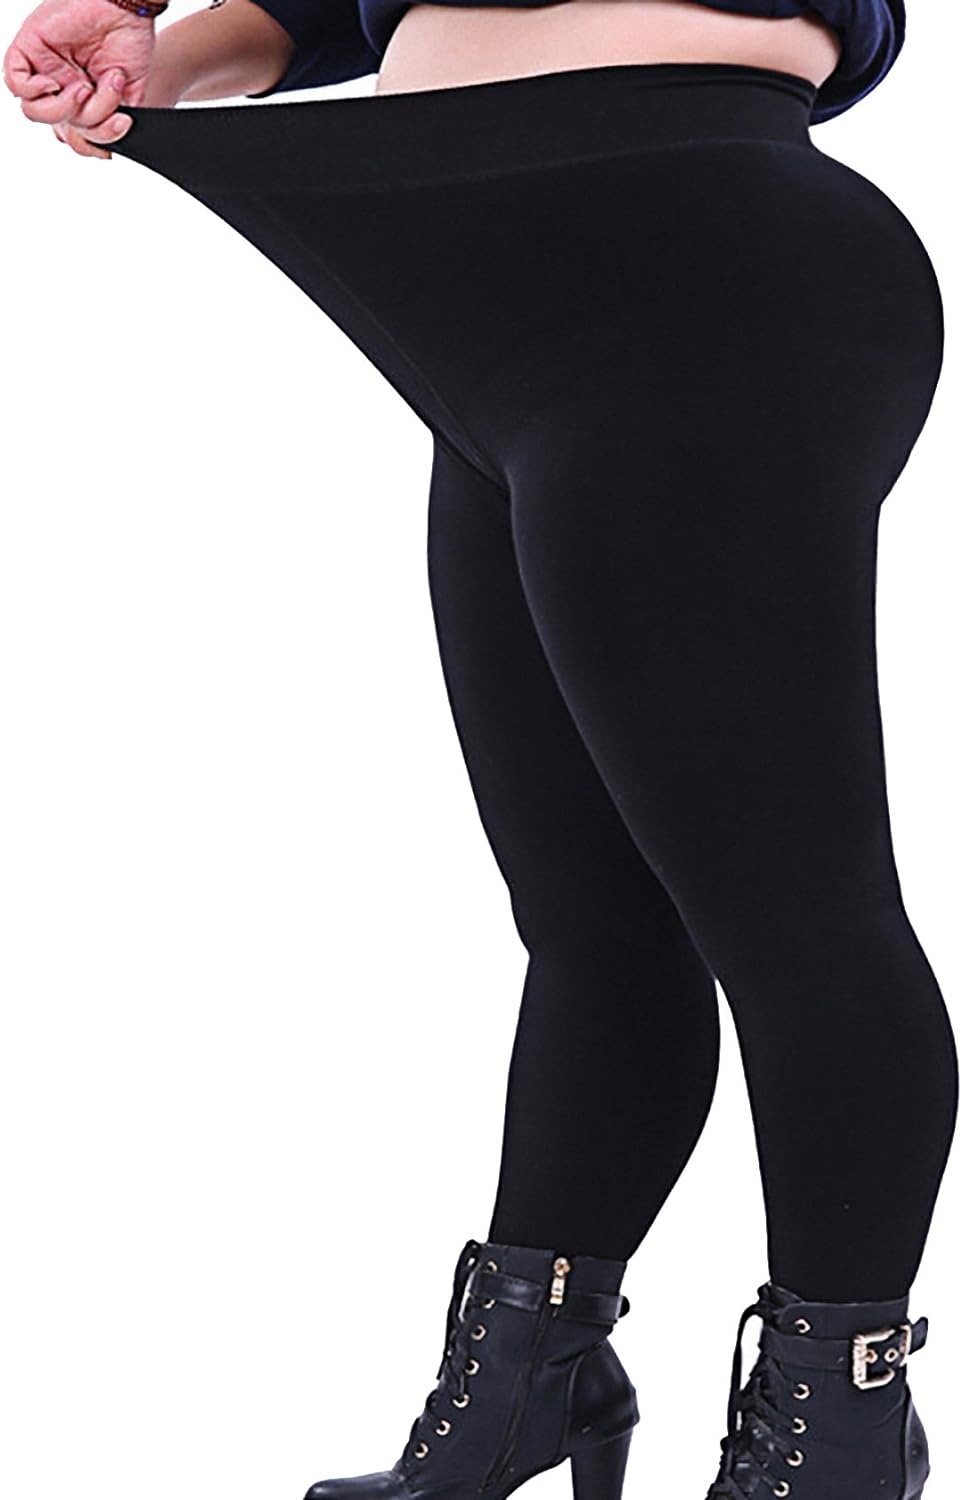 Cotton Leggings for Women Plus Size High Waisted Thick XL 2XL 3XL 4XL